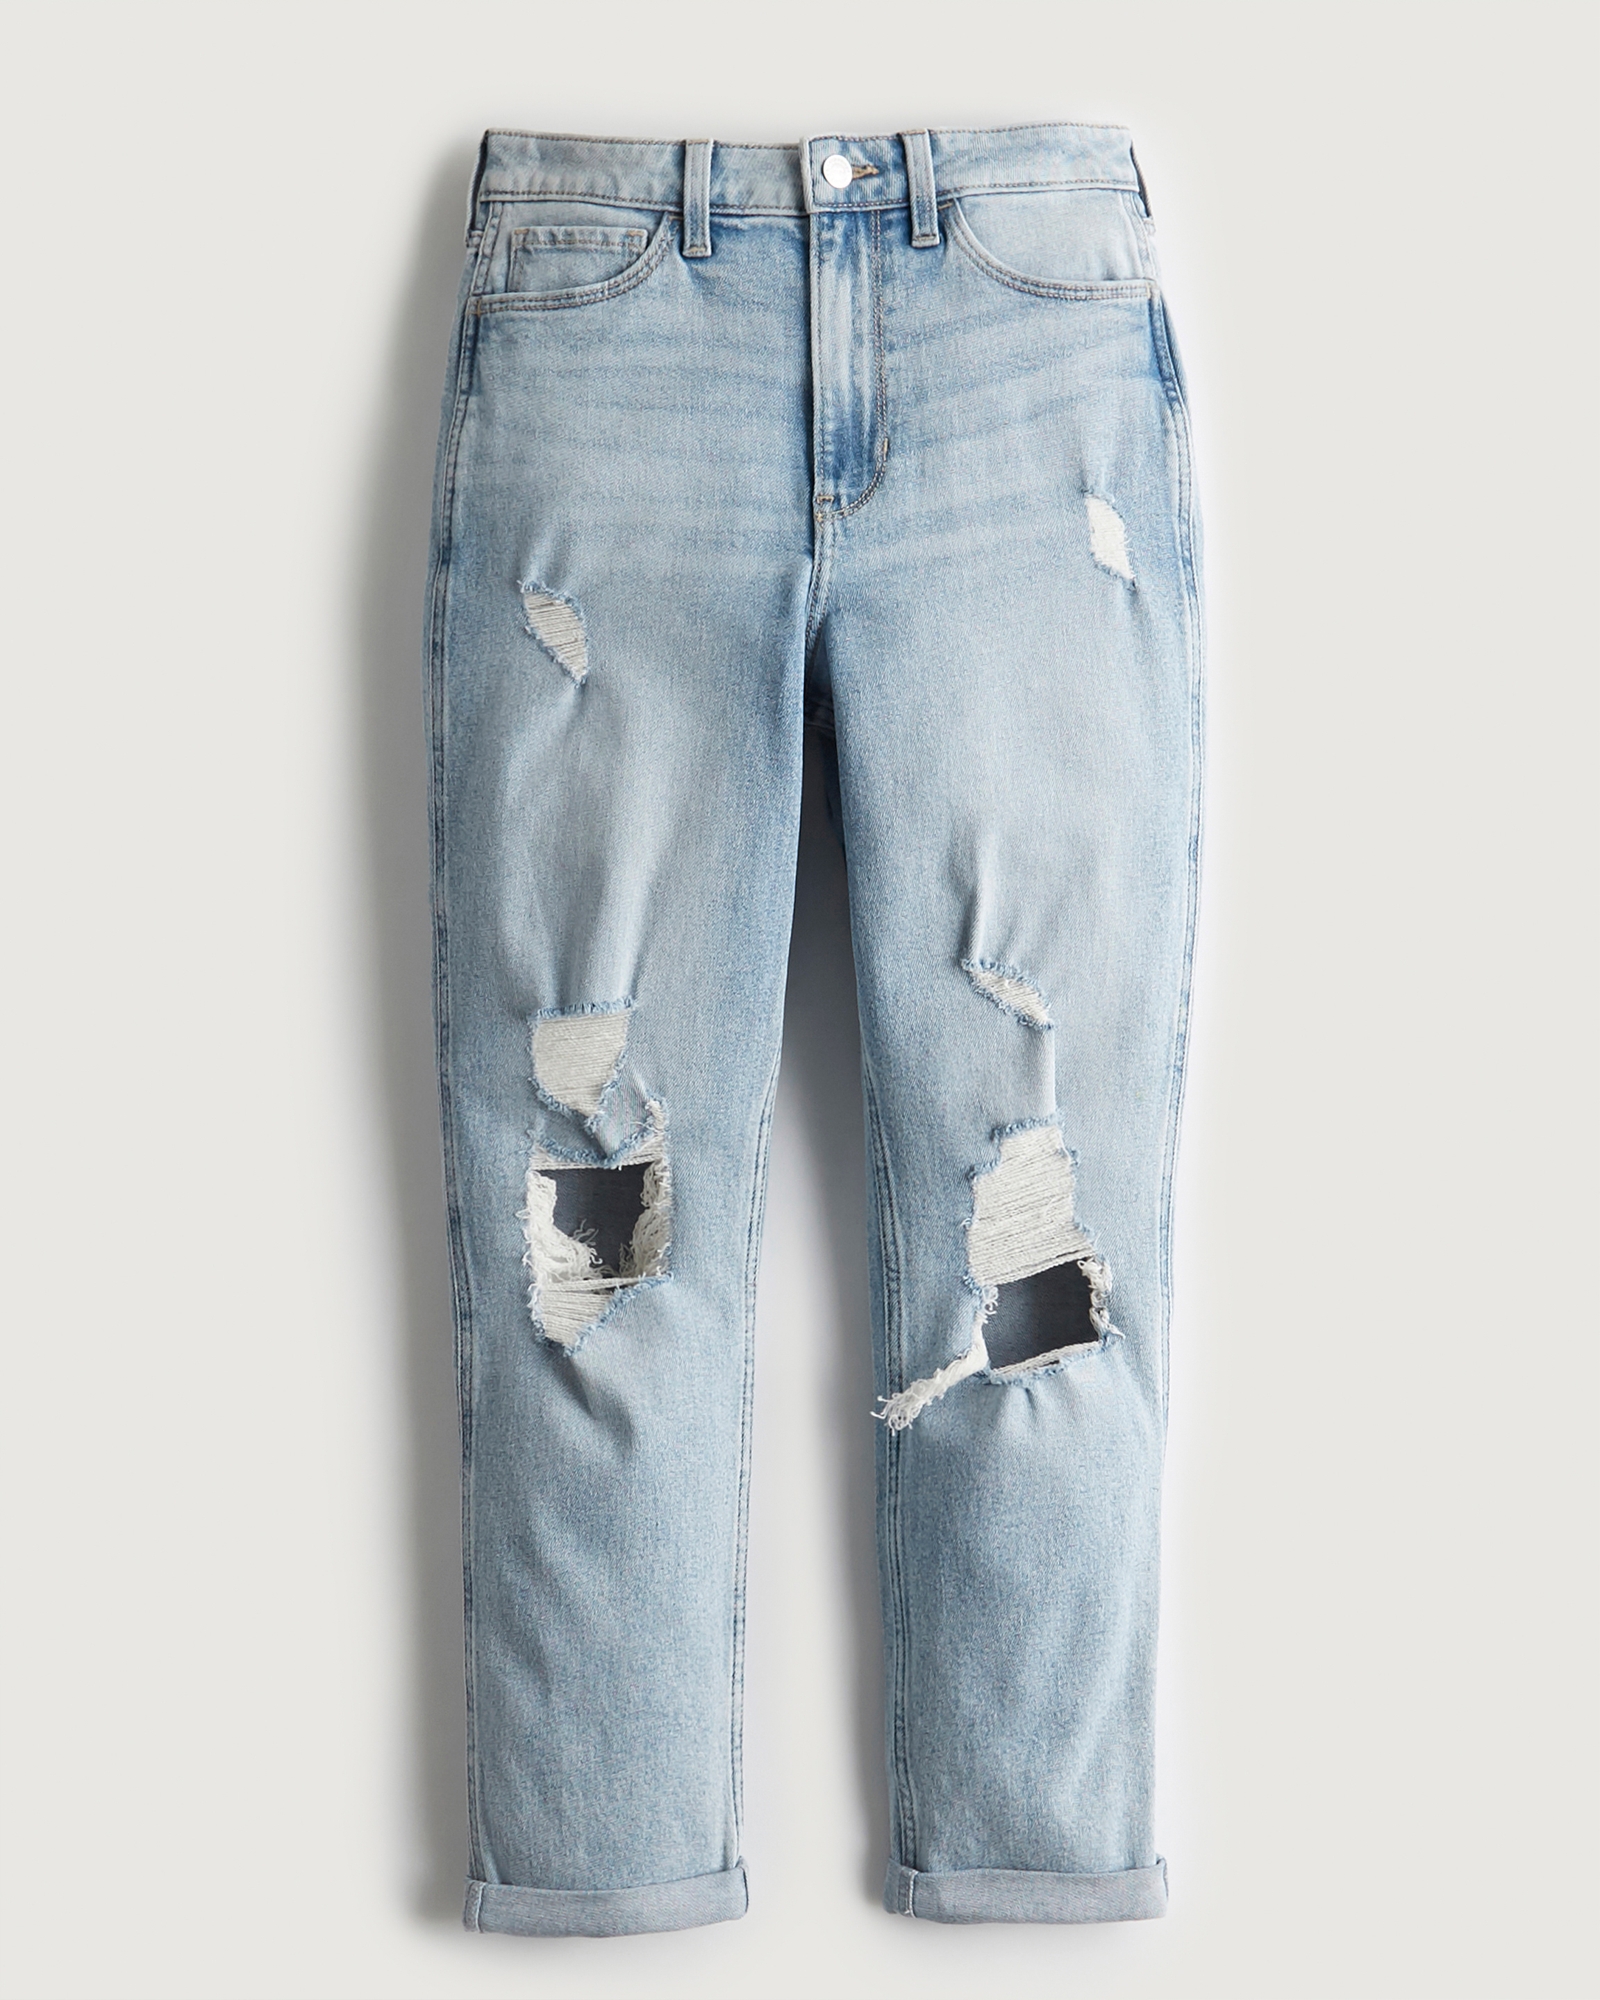 Hollister Jeans Womens 00 High Rise Crop Super Skinny Blue Denim Distressed